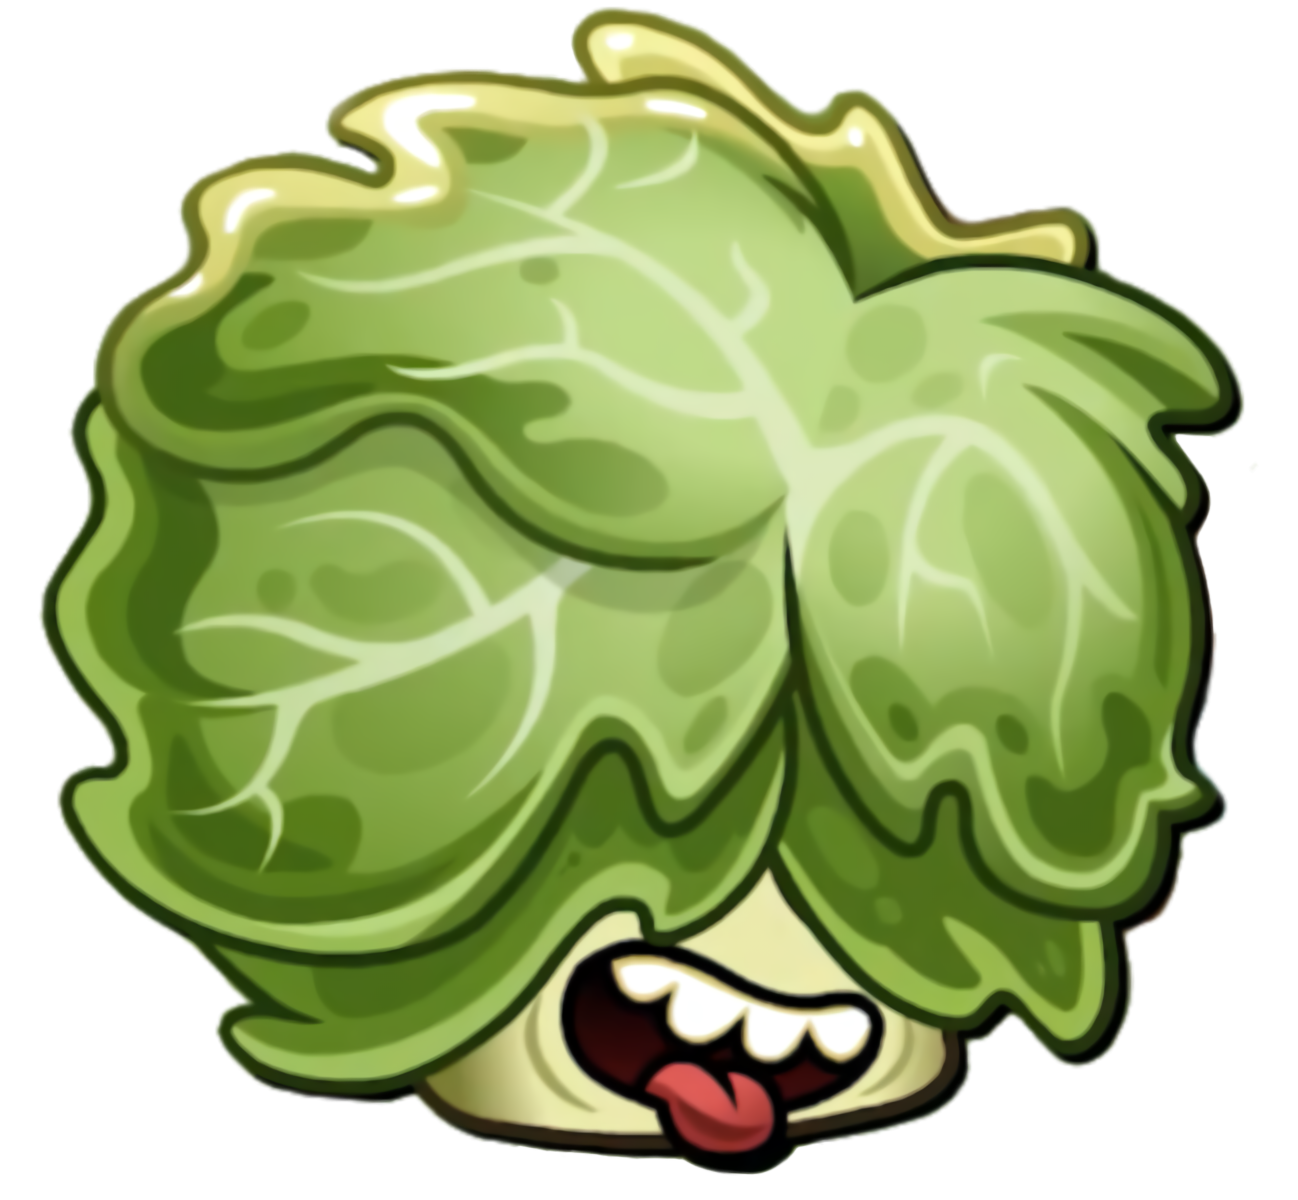 Headbutter lettuce pvz2. ПВЗ растения против зомби 2. Латук PVZ 2. Plants vs Zombies латук. Re plant